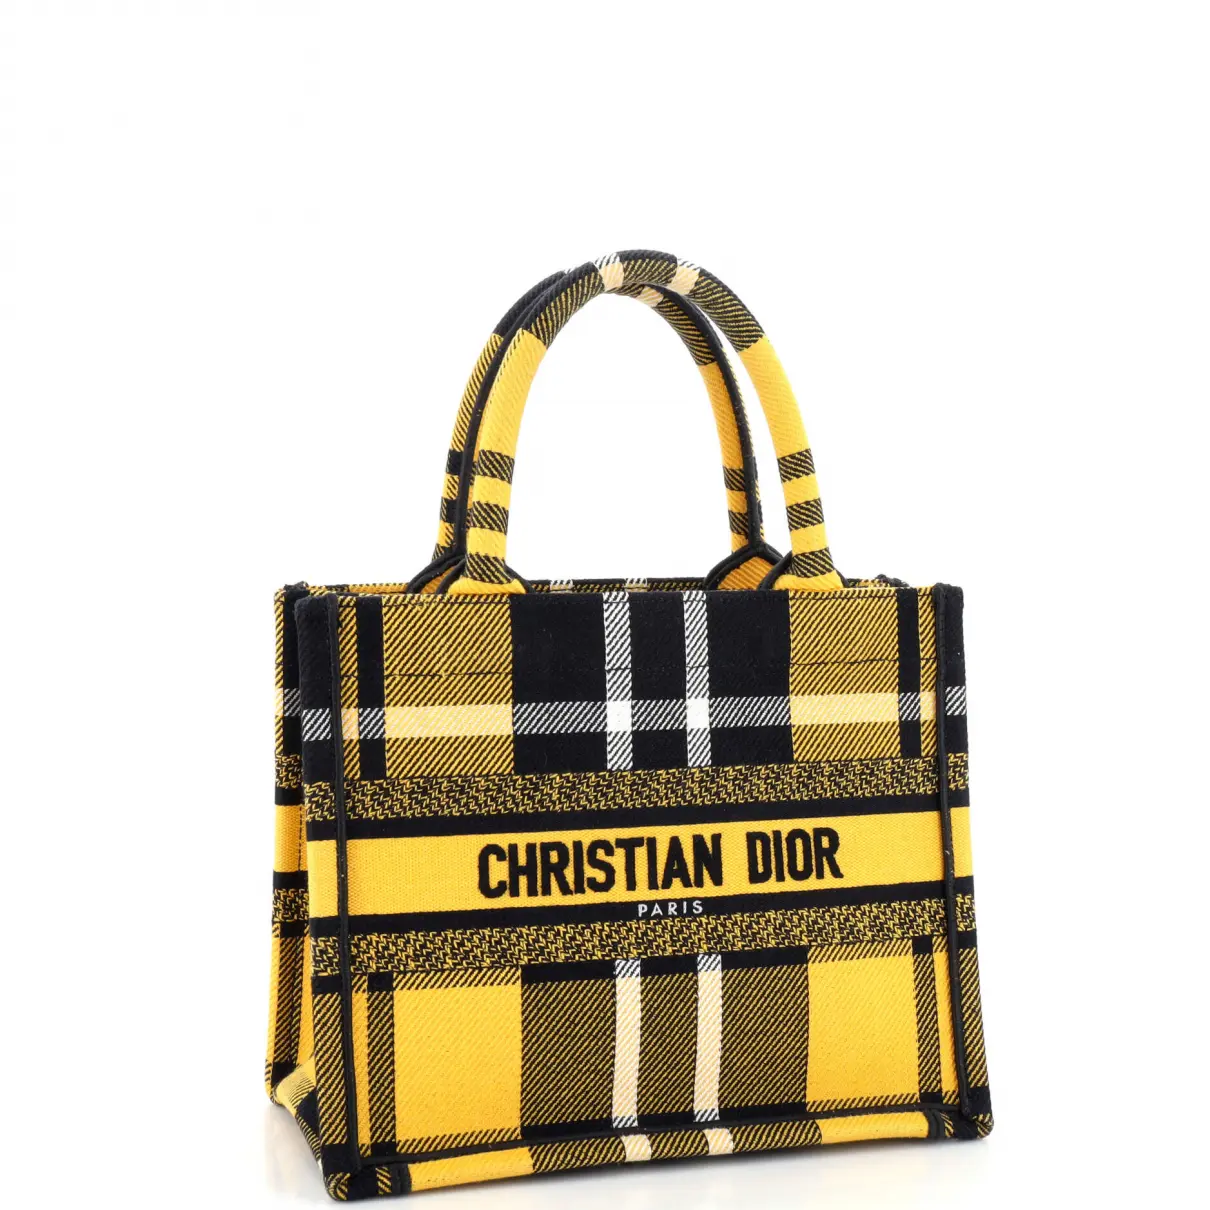 Buy Christian Dior Book Tote leather handbag online